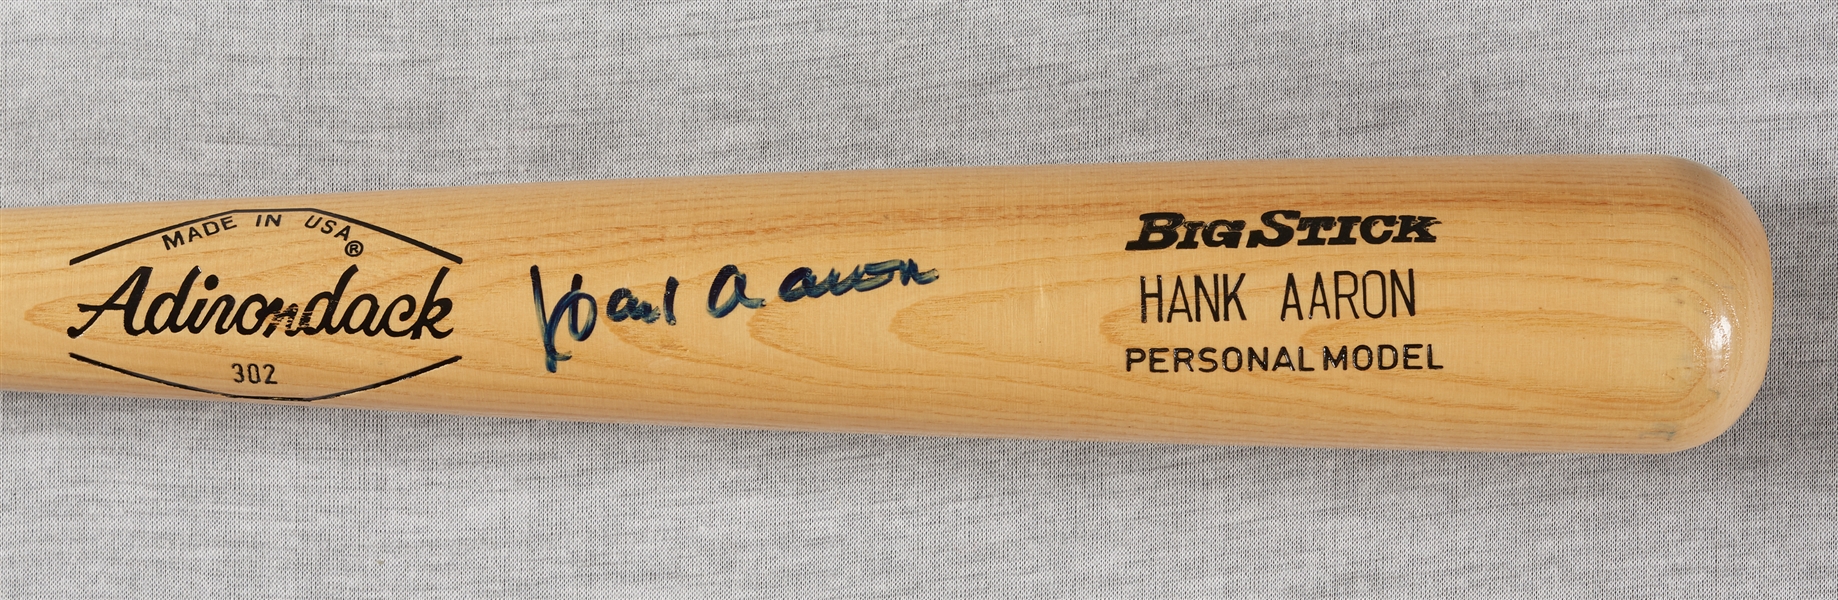 Hank Aaron Signed Adirondack Bat (JSA)